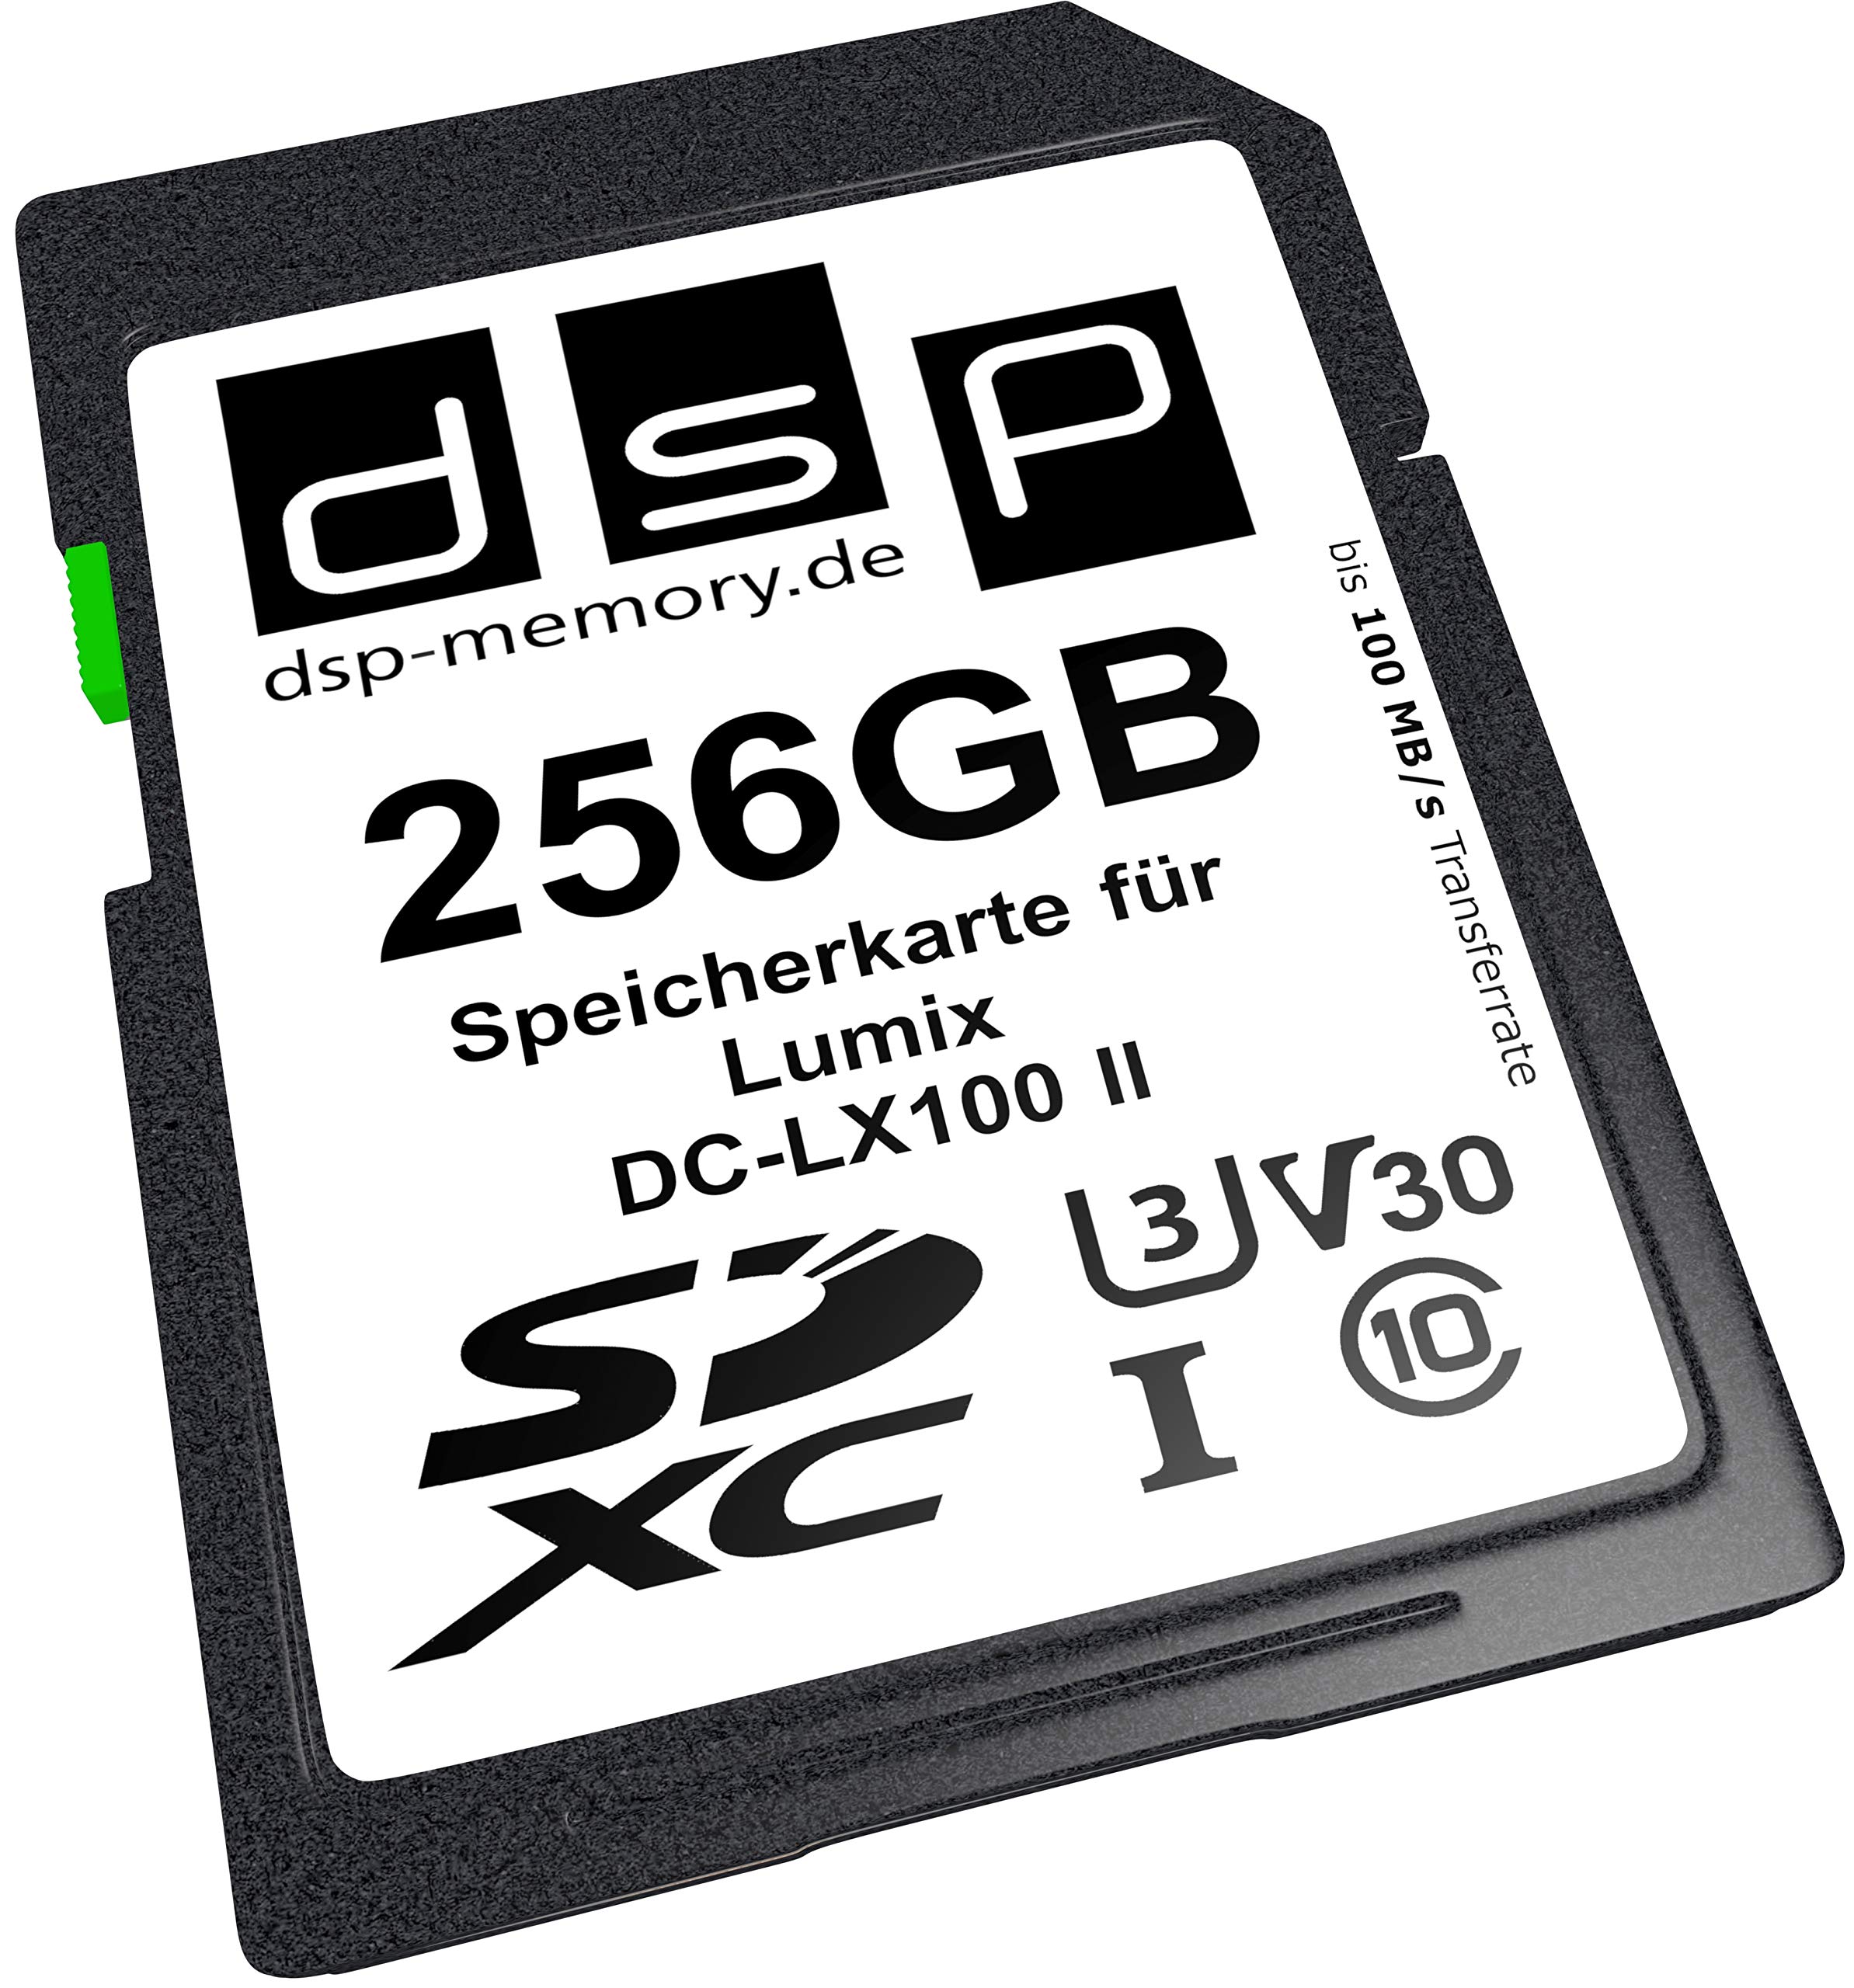 DSP Memory 256GB Professional V30 Speicherkarte für Lumix DC-LX100 II Digitalkamera